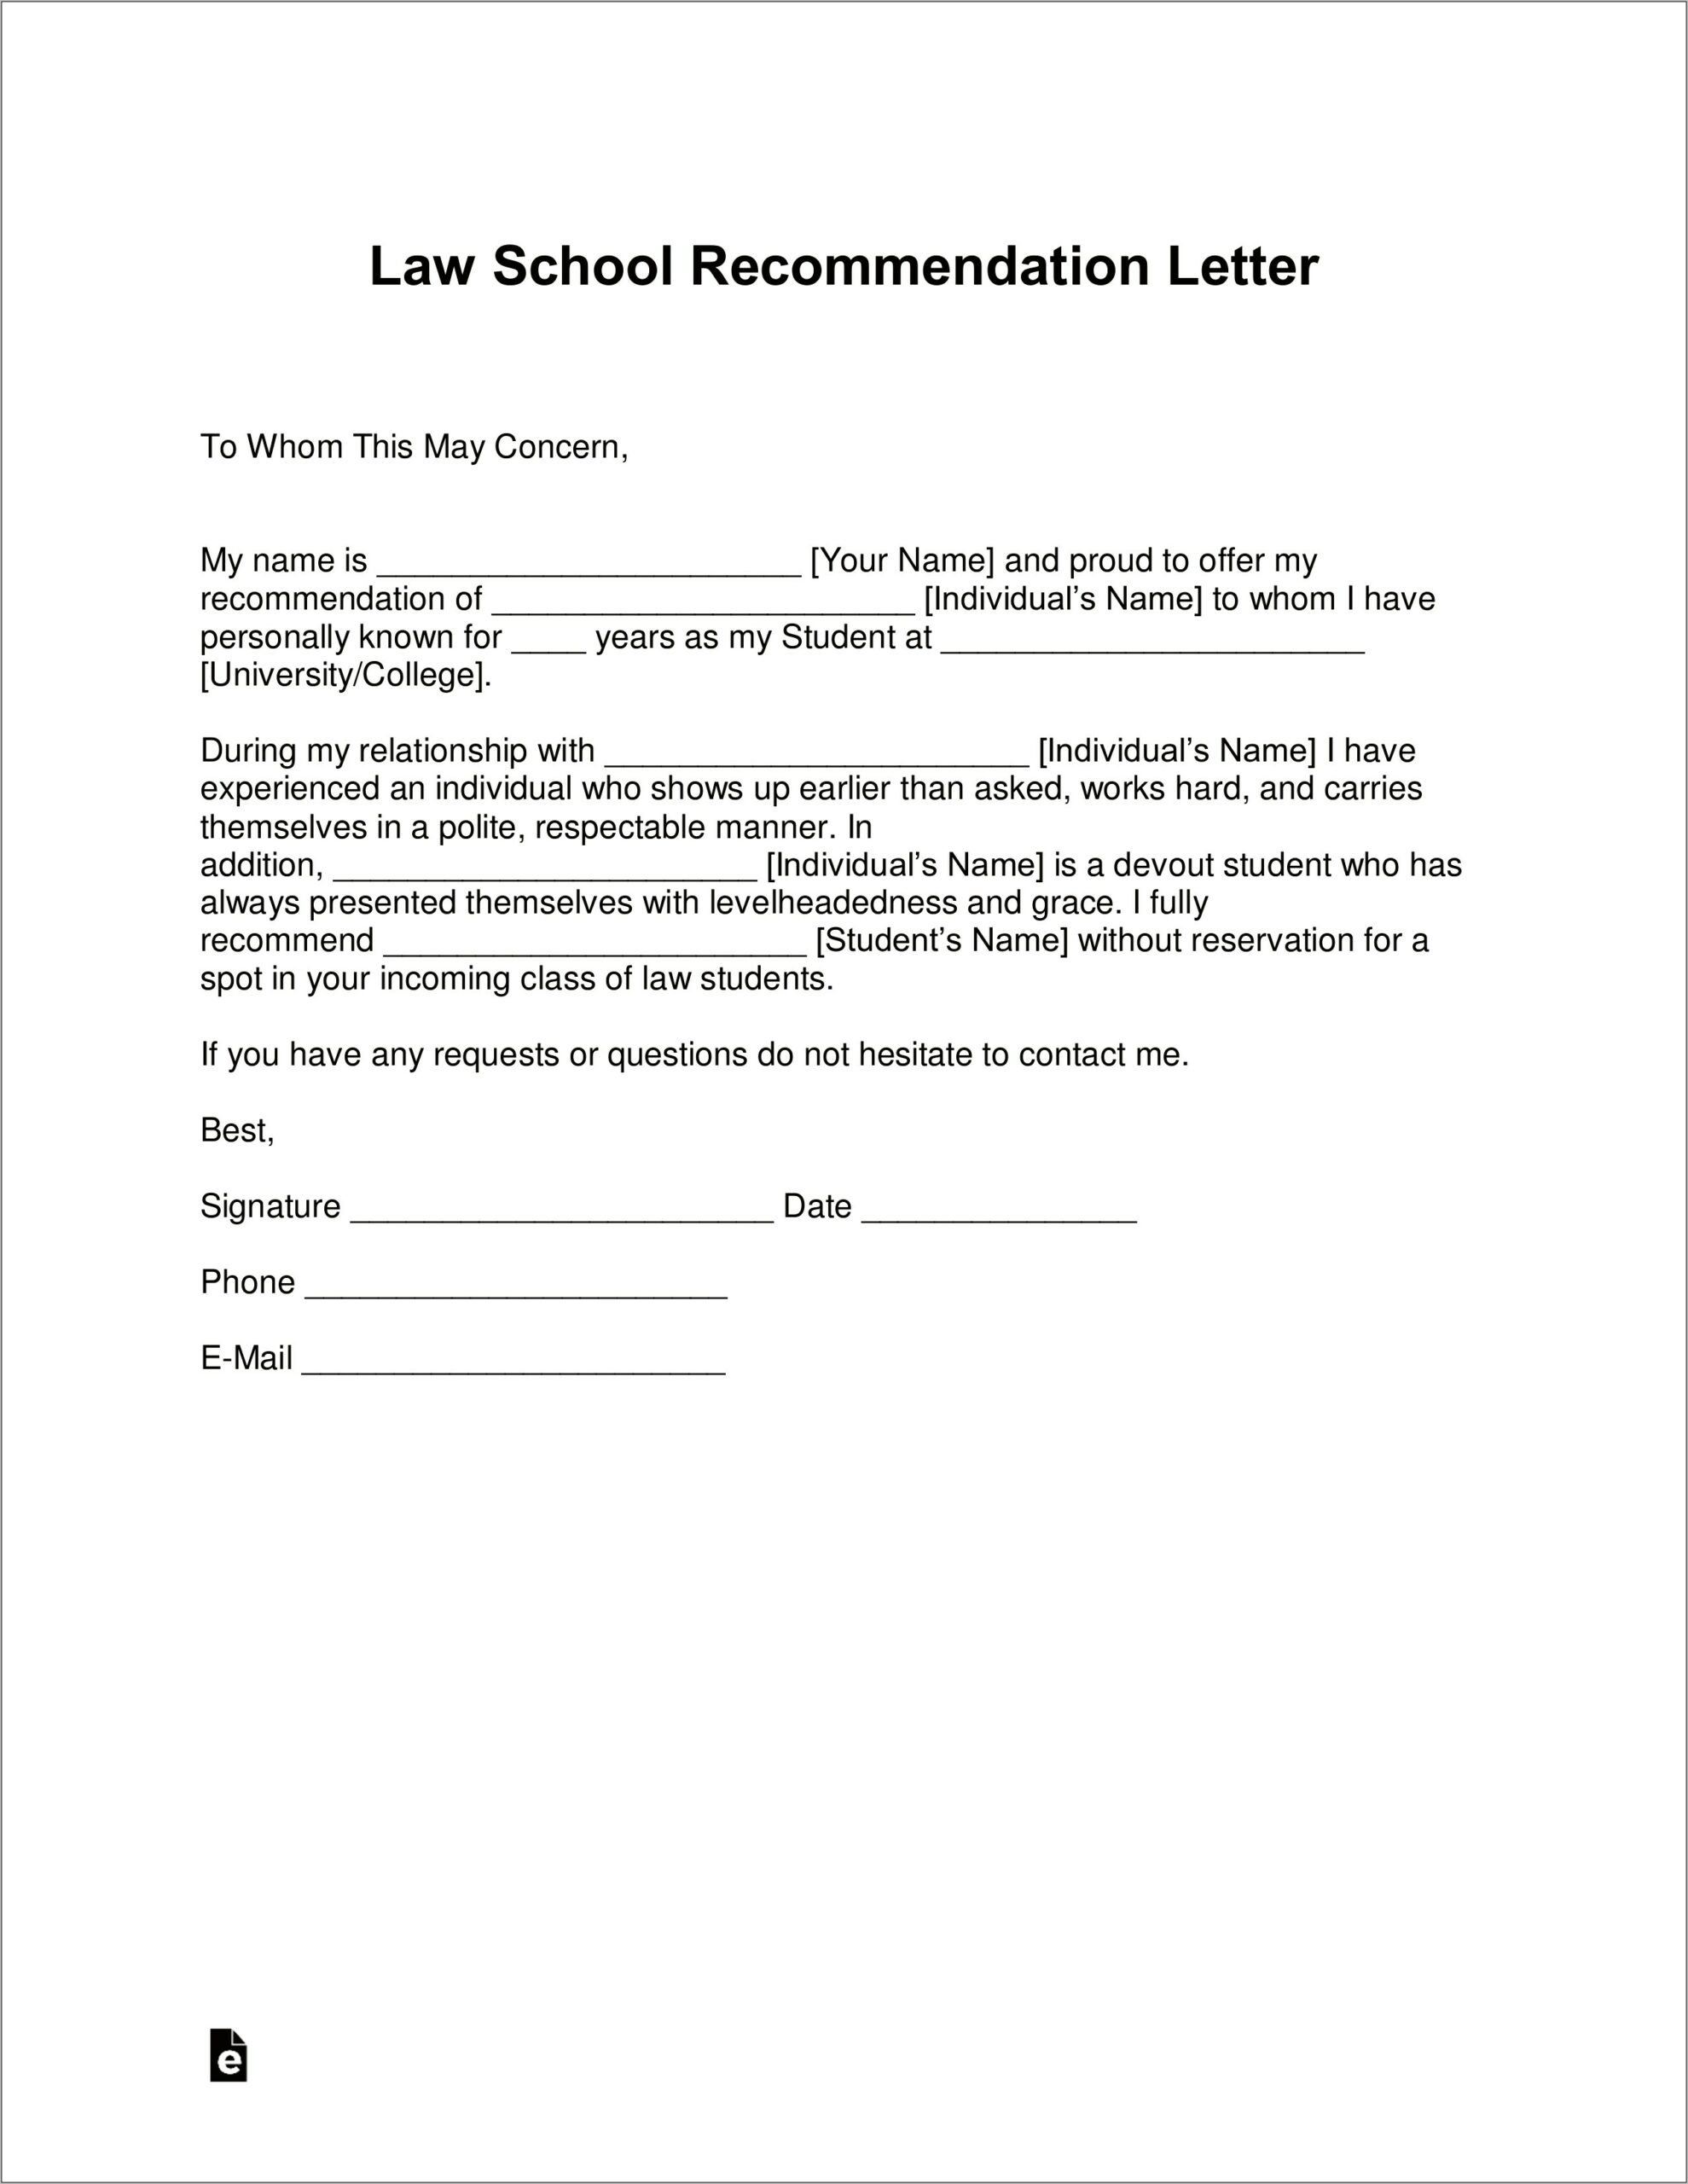 Wisconsin Law School Sample Resume